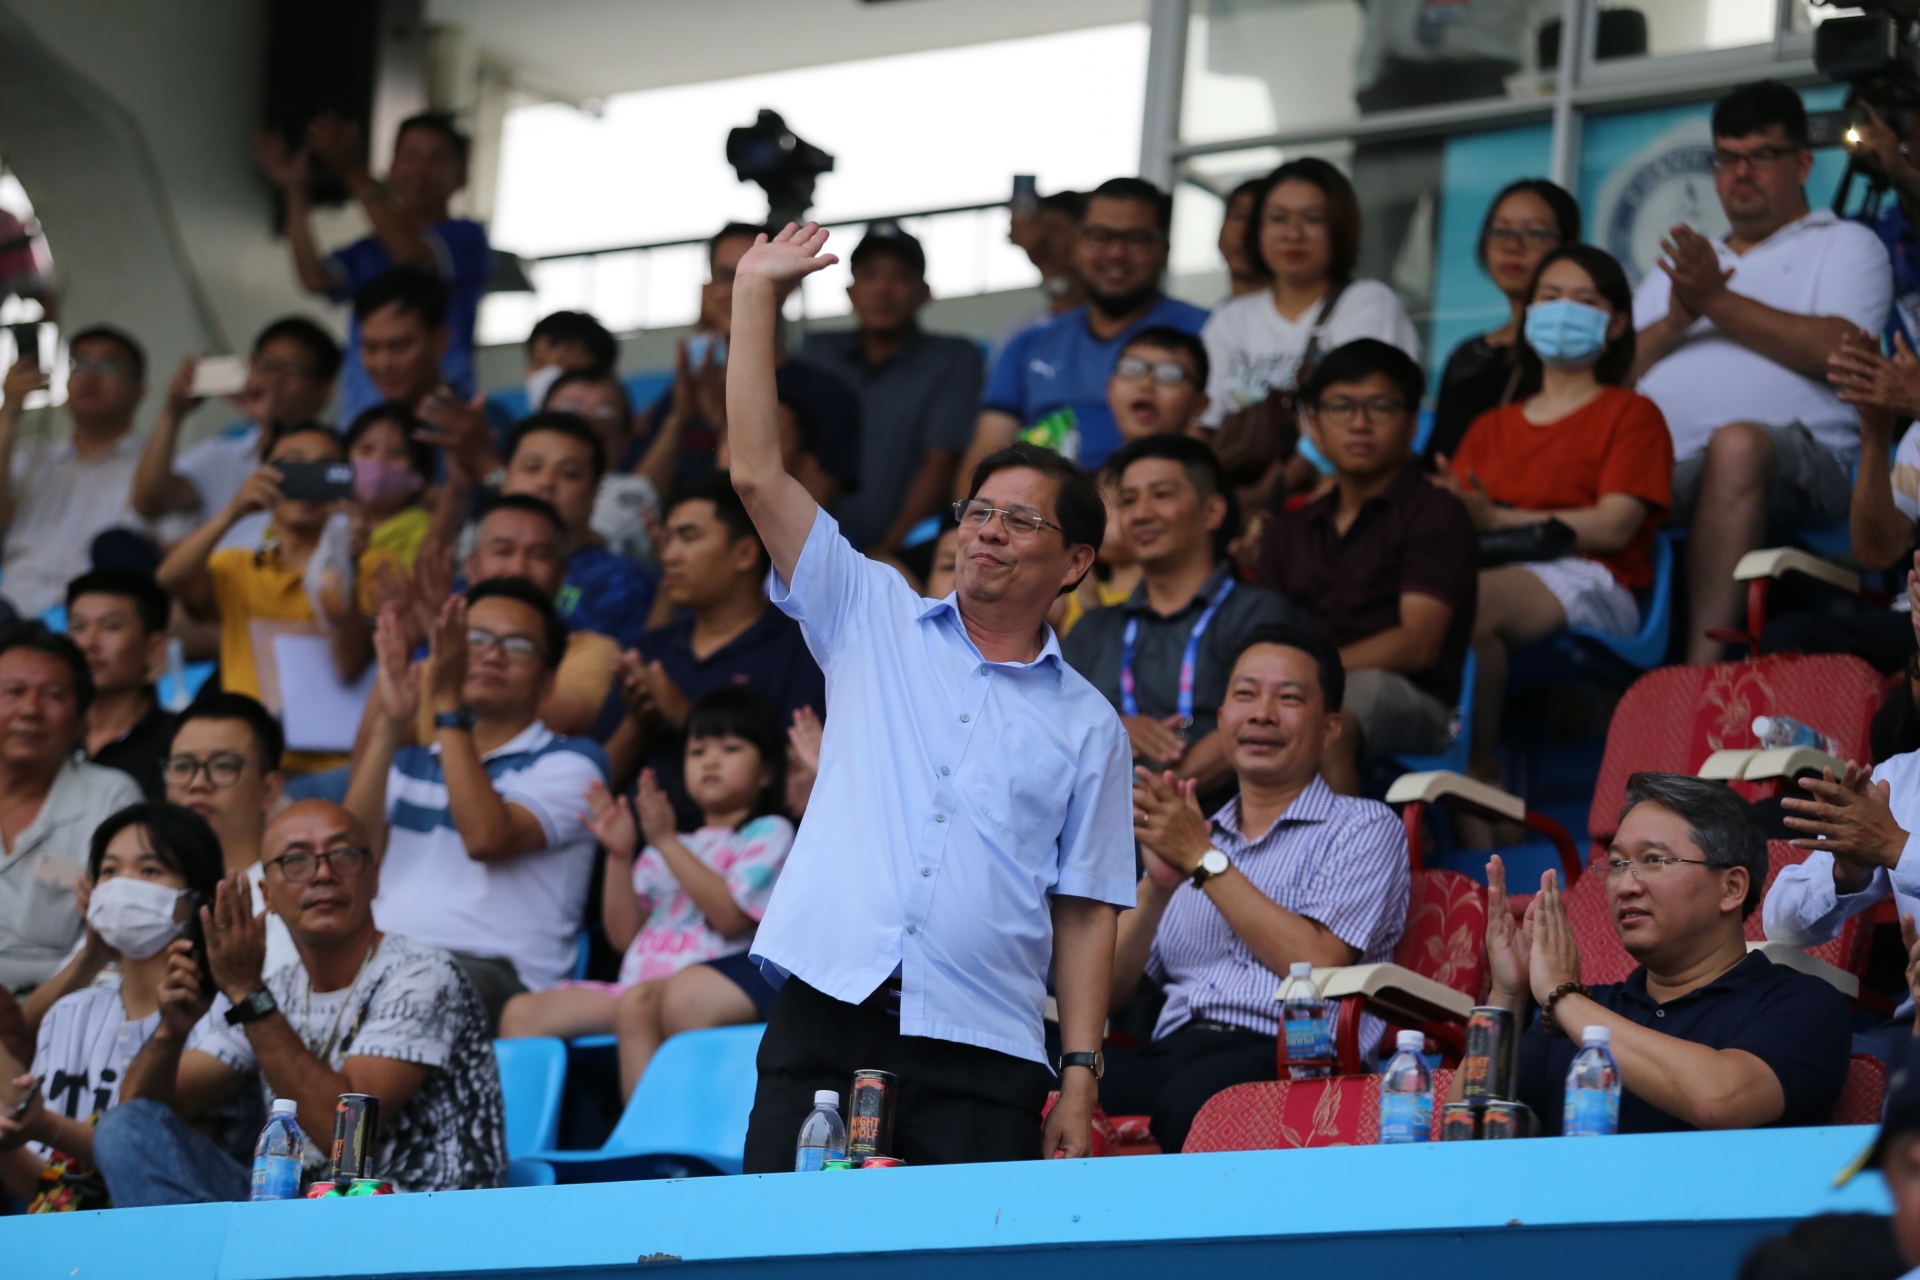 …and Nguyen Tan Tuan attend the match between Khanh Hoa FC and SHB Da Nang

